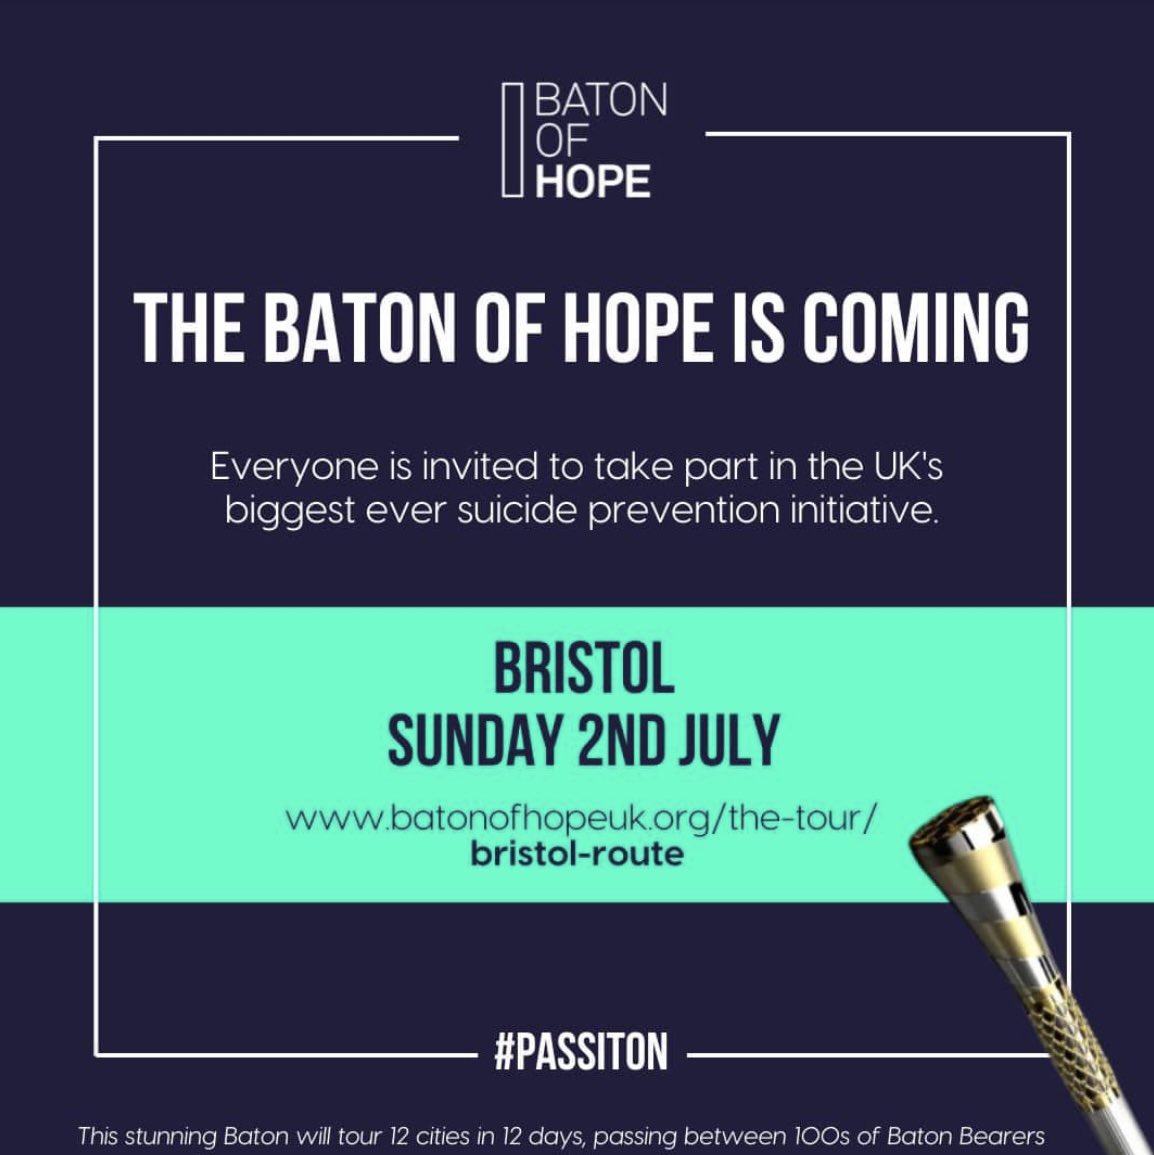 #TheBatonIsComing
#BatonOfHopeUk
#PassItOn
DAY 8. Bristol.
Good luck everyone today!💙💙💙
1 more sleep until Birmingham 👍